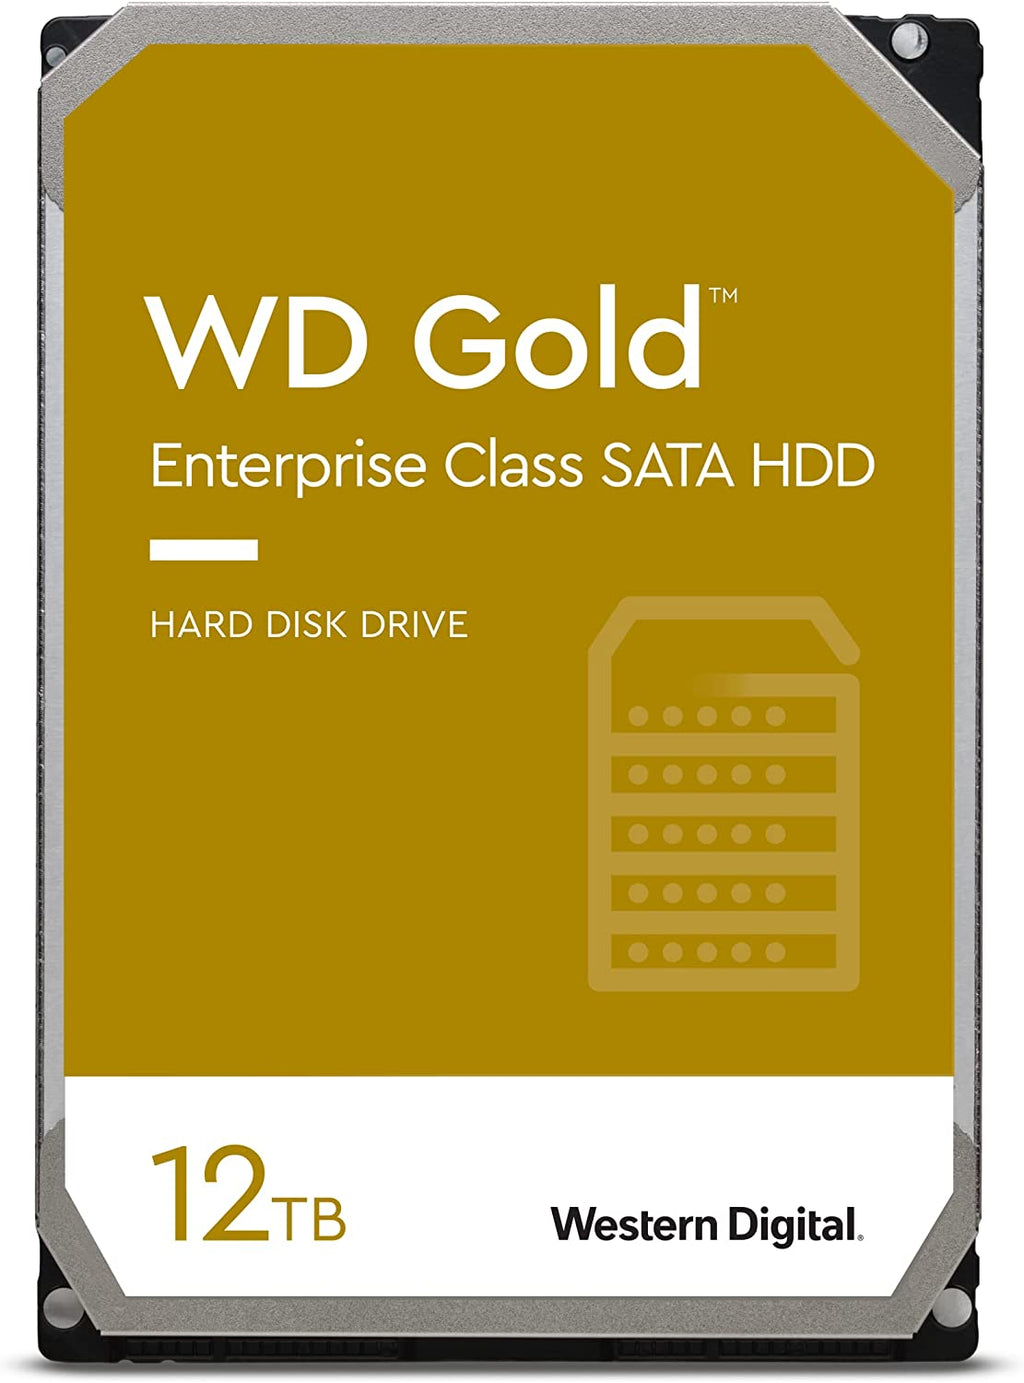 Western Digital 12TB WD Gold Enterprise Class Internal Hard Drive - 3.5" SATA 6Gb/s 512e -Speed: 7,200RPM  - 5 Years Limited Warranty-0